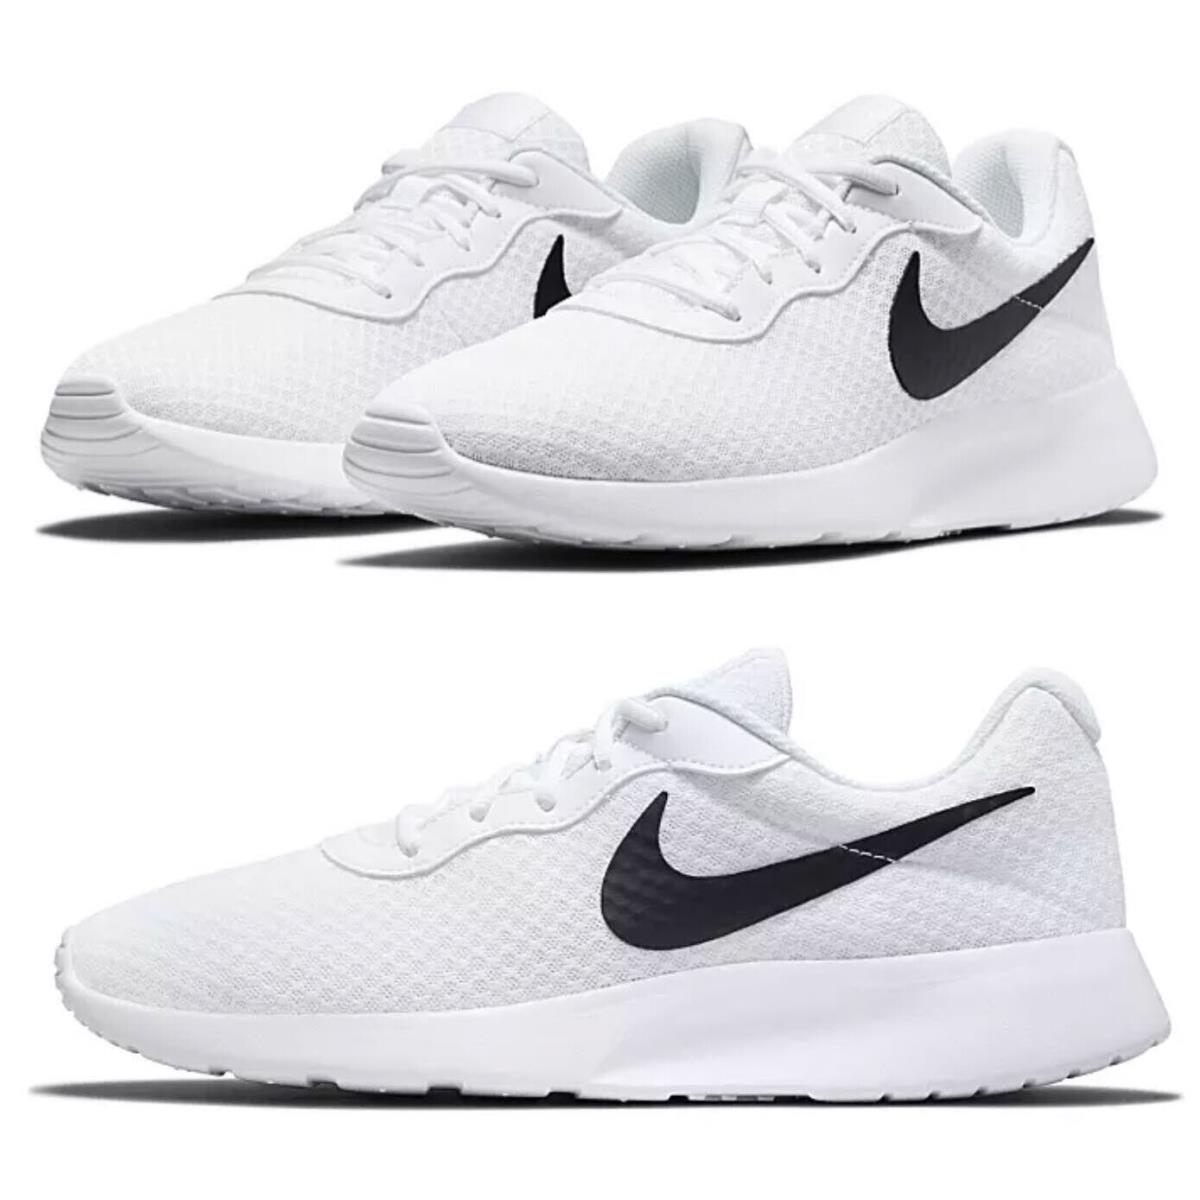 Nike Tanjun Athletic Sneakers Casual Shoes Work Mens White Black Size 11.5